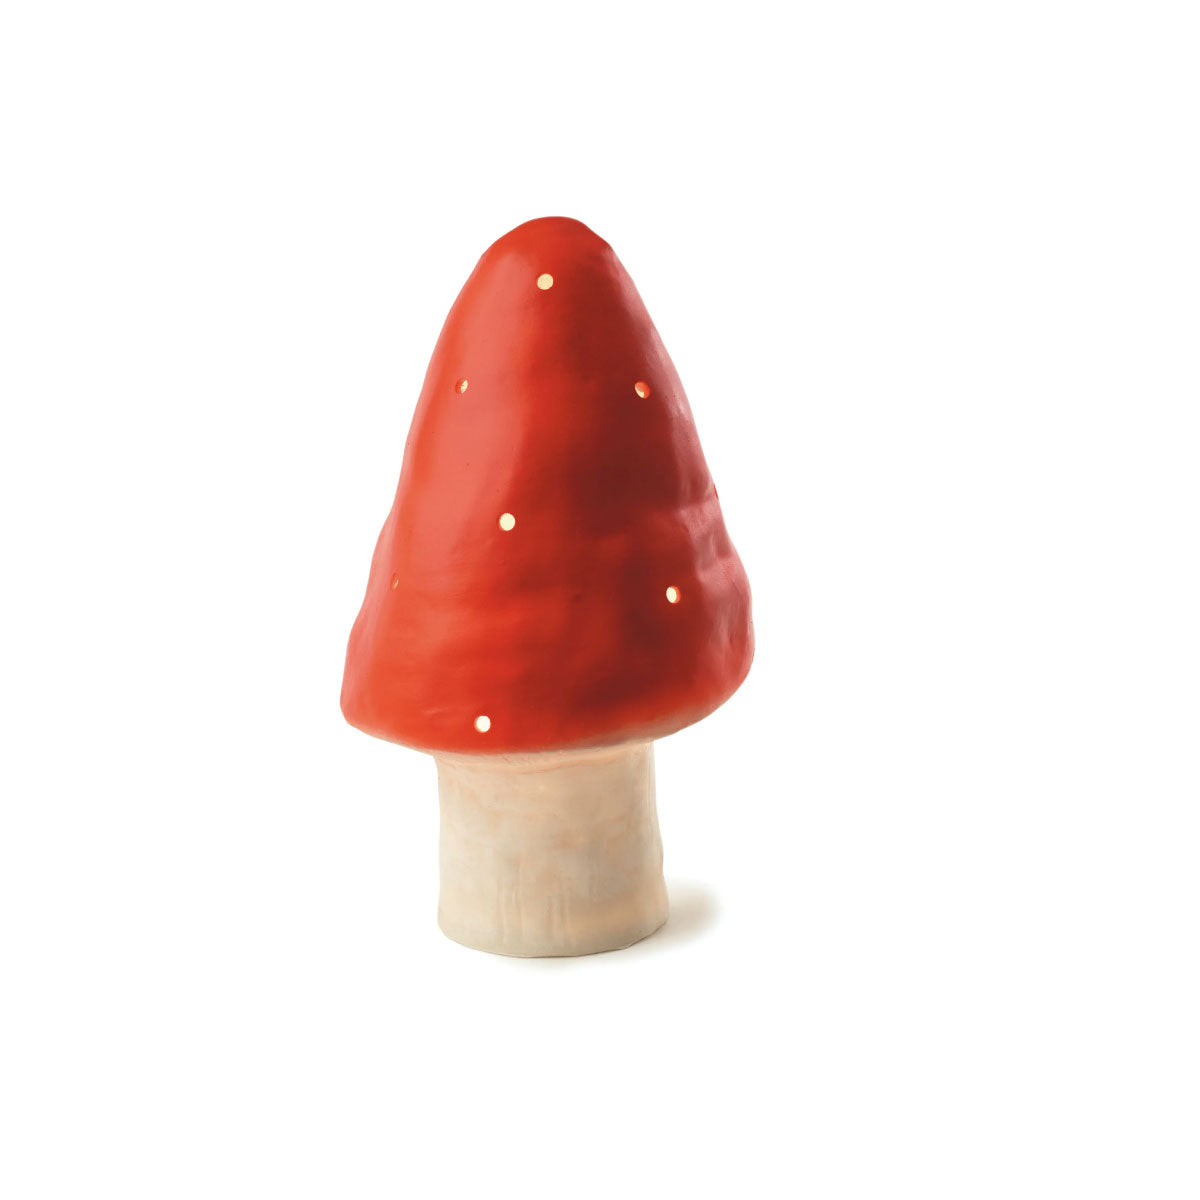 Egmont Mushroom Lamps - Small Red